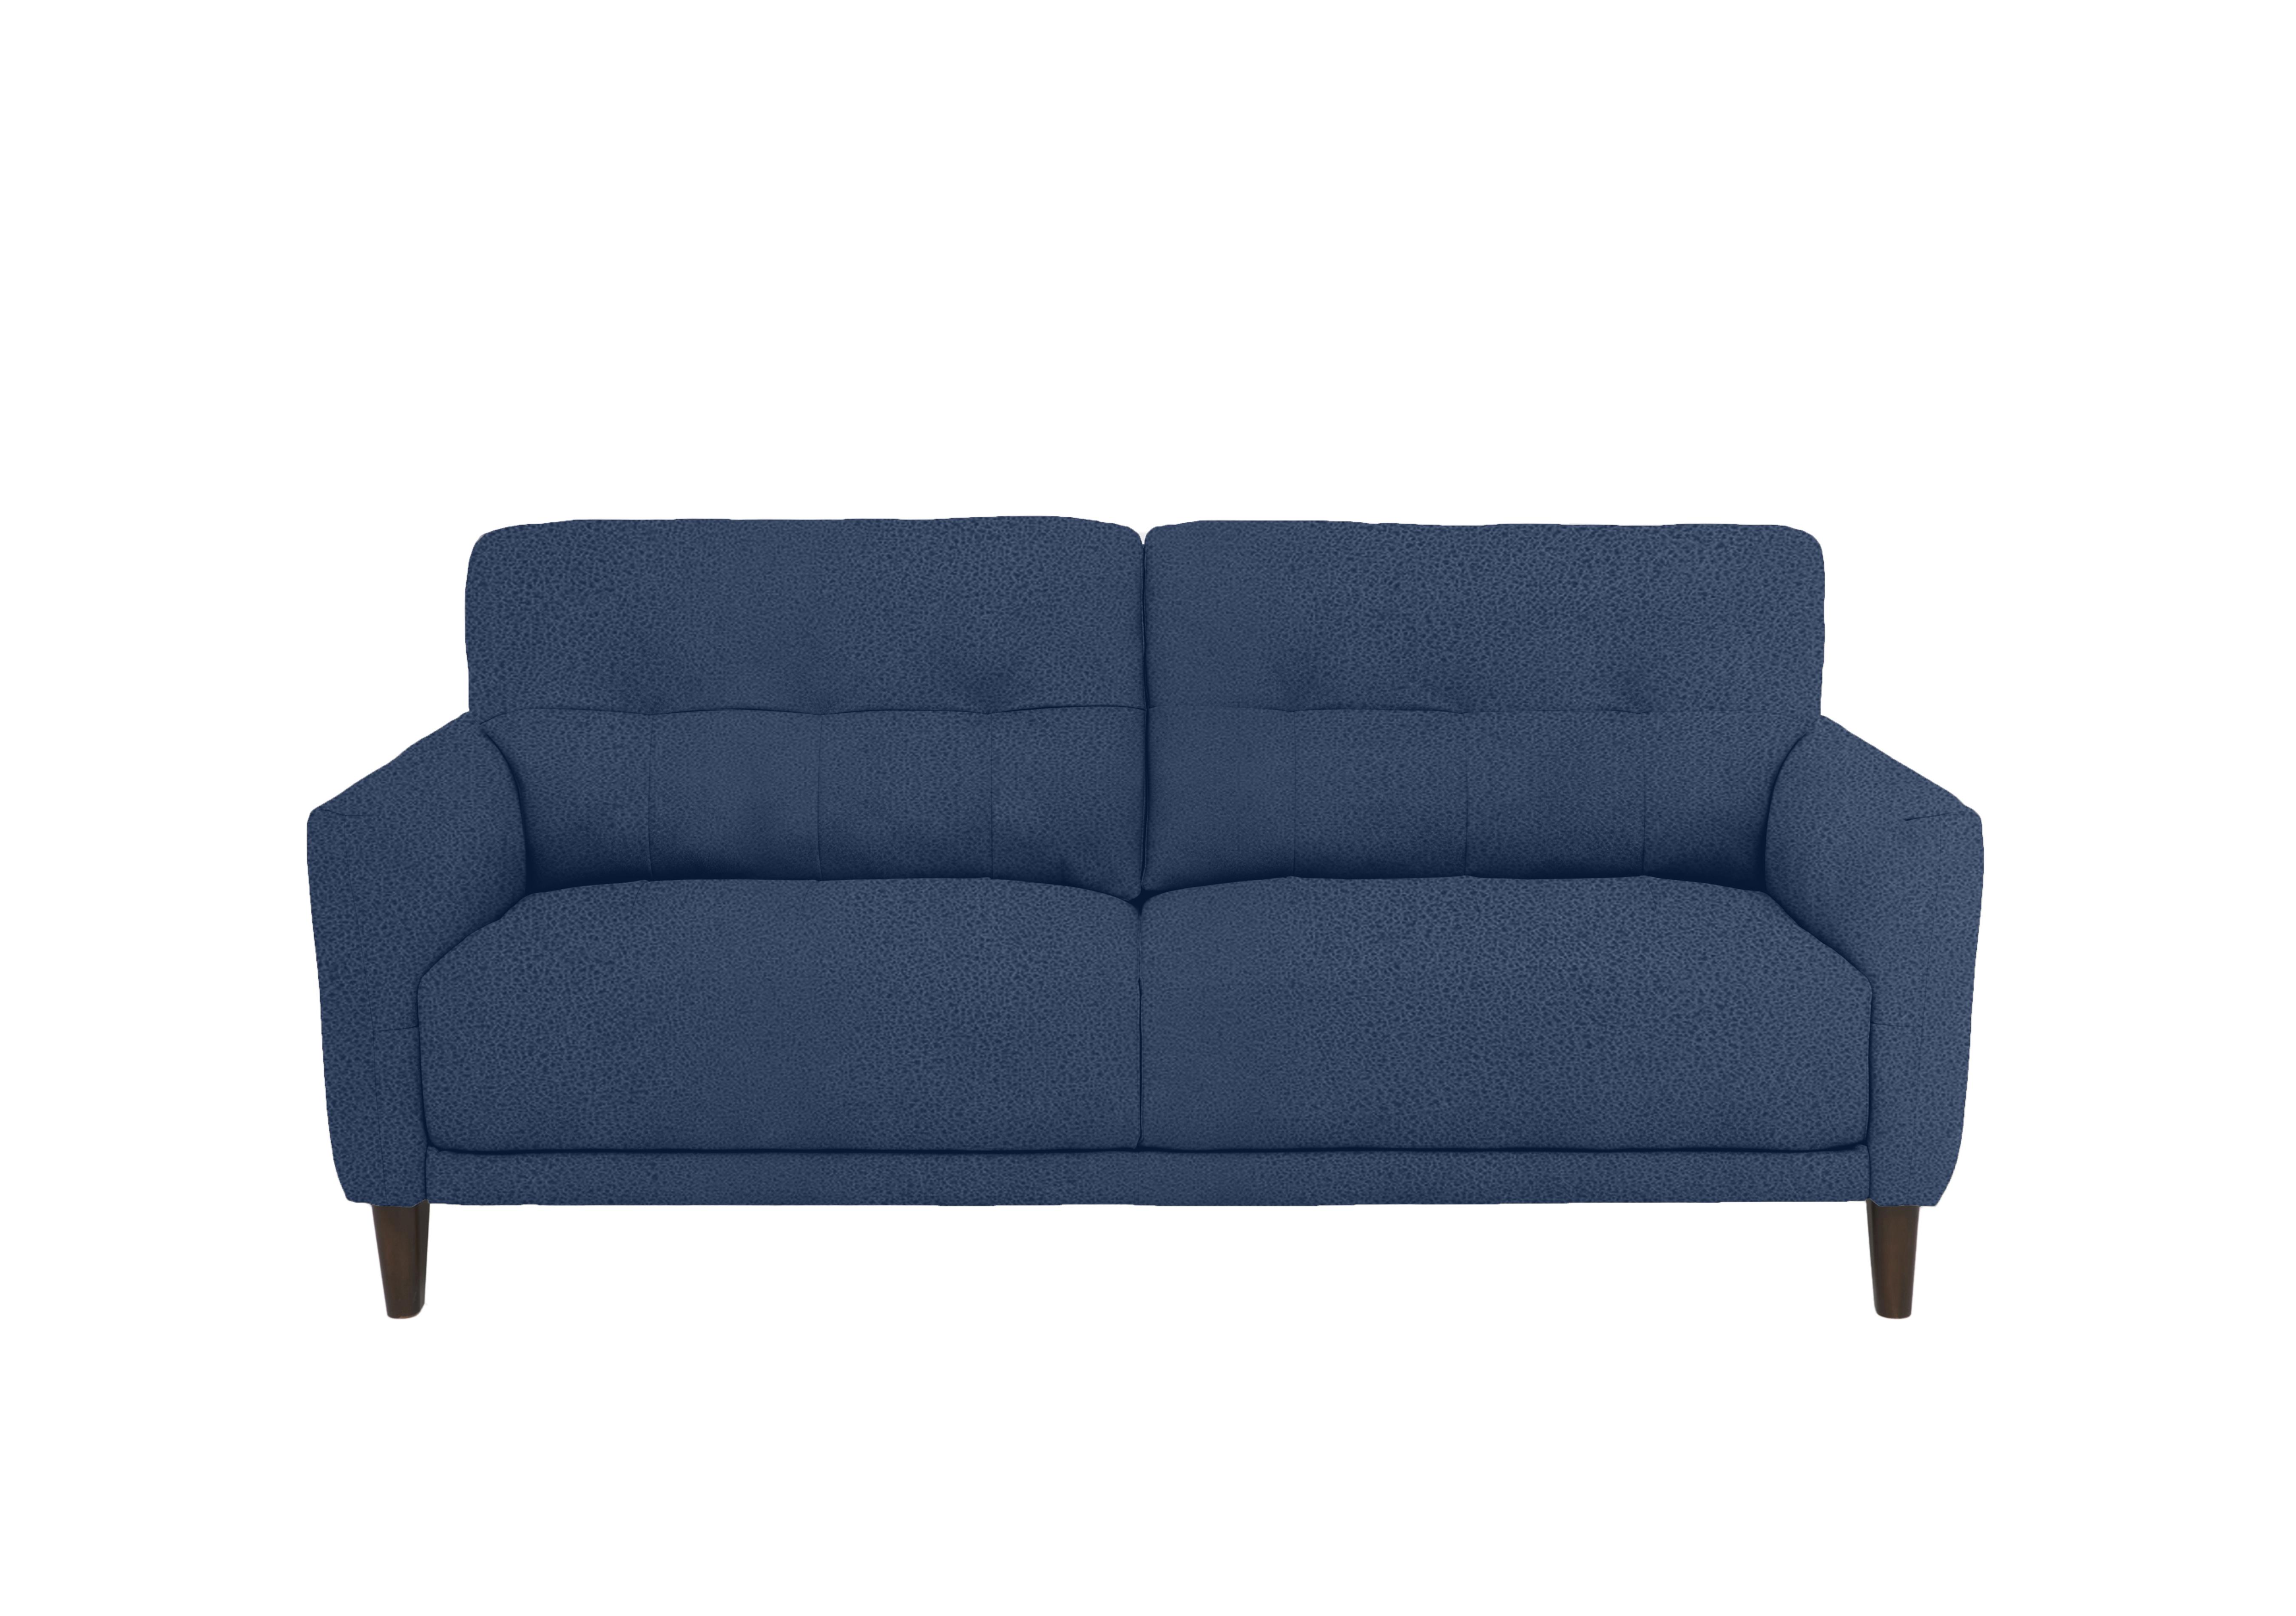 Uno Fabric 3 Seater Sofa in Bfa-Blj-R10 Blue on Furniture Village